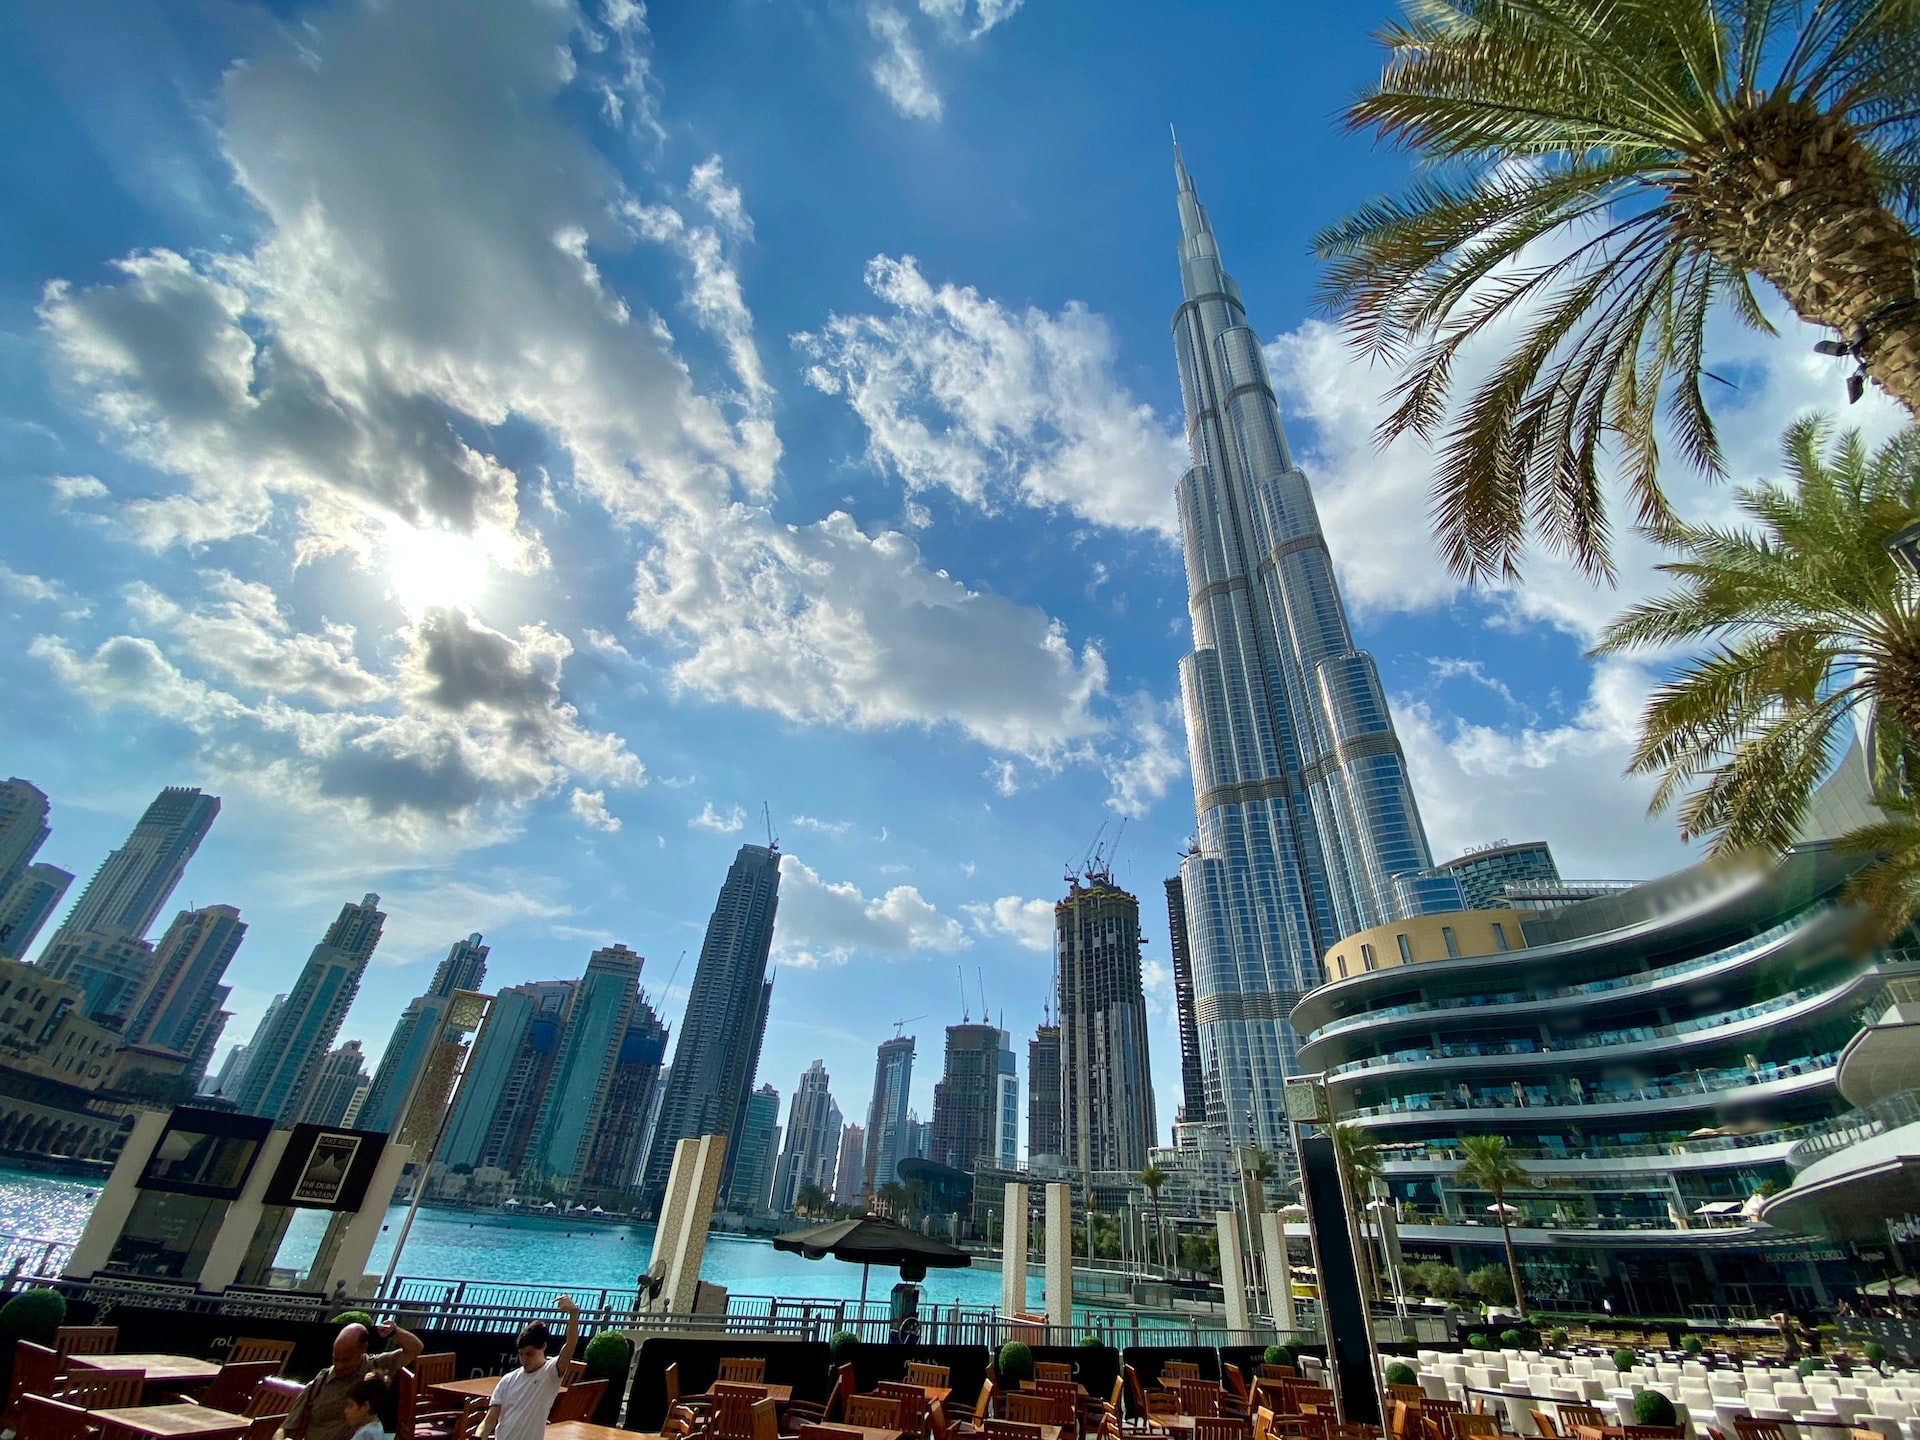 Top attractions in Dubai